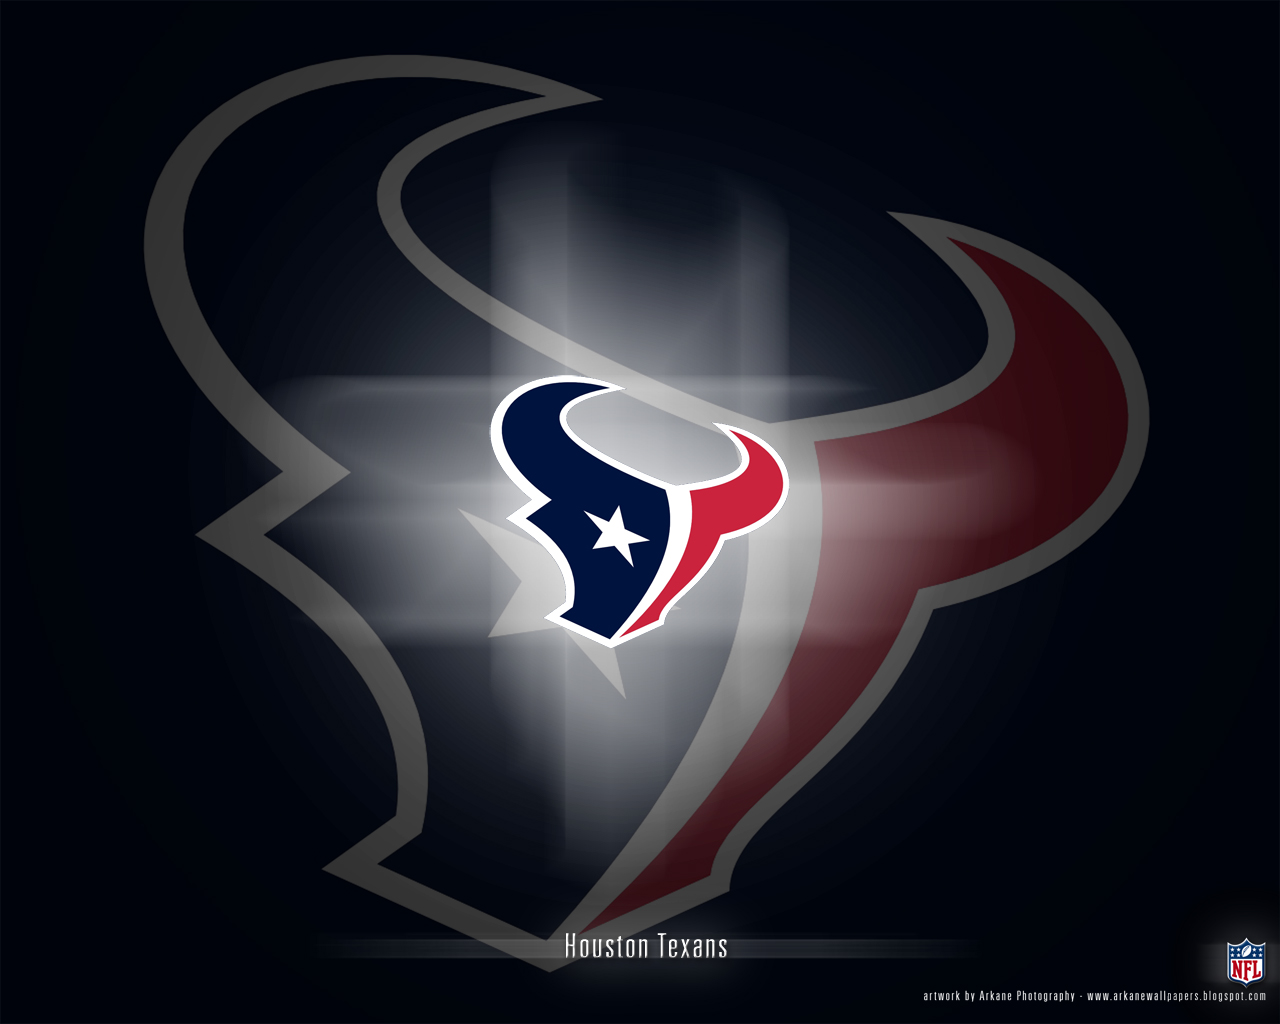 Houston Texans Wallpaper HD Early